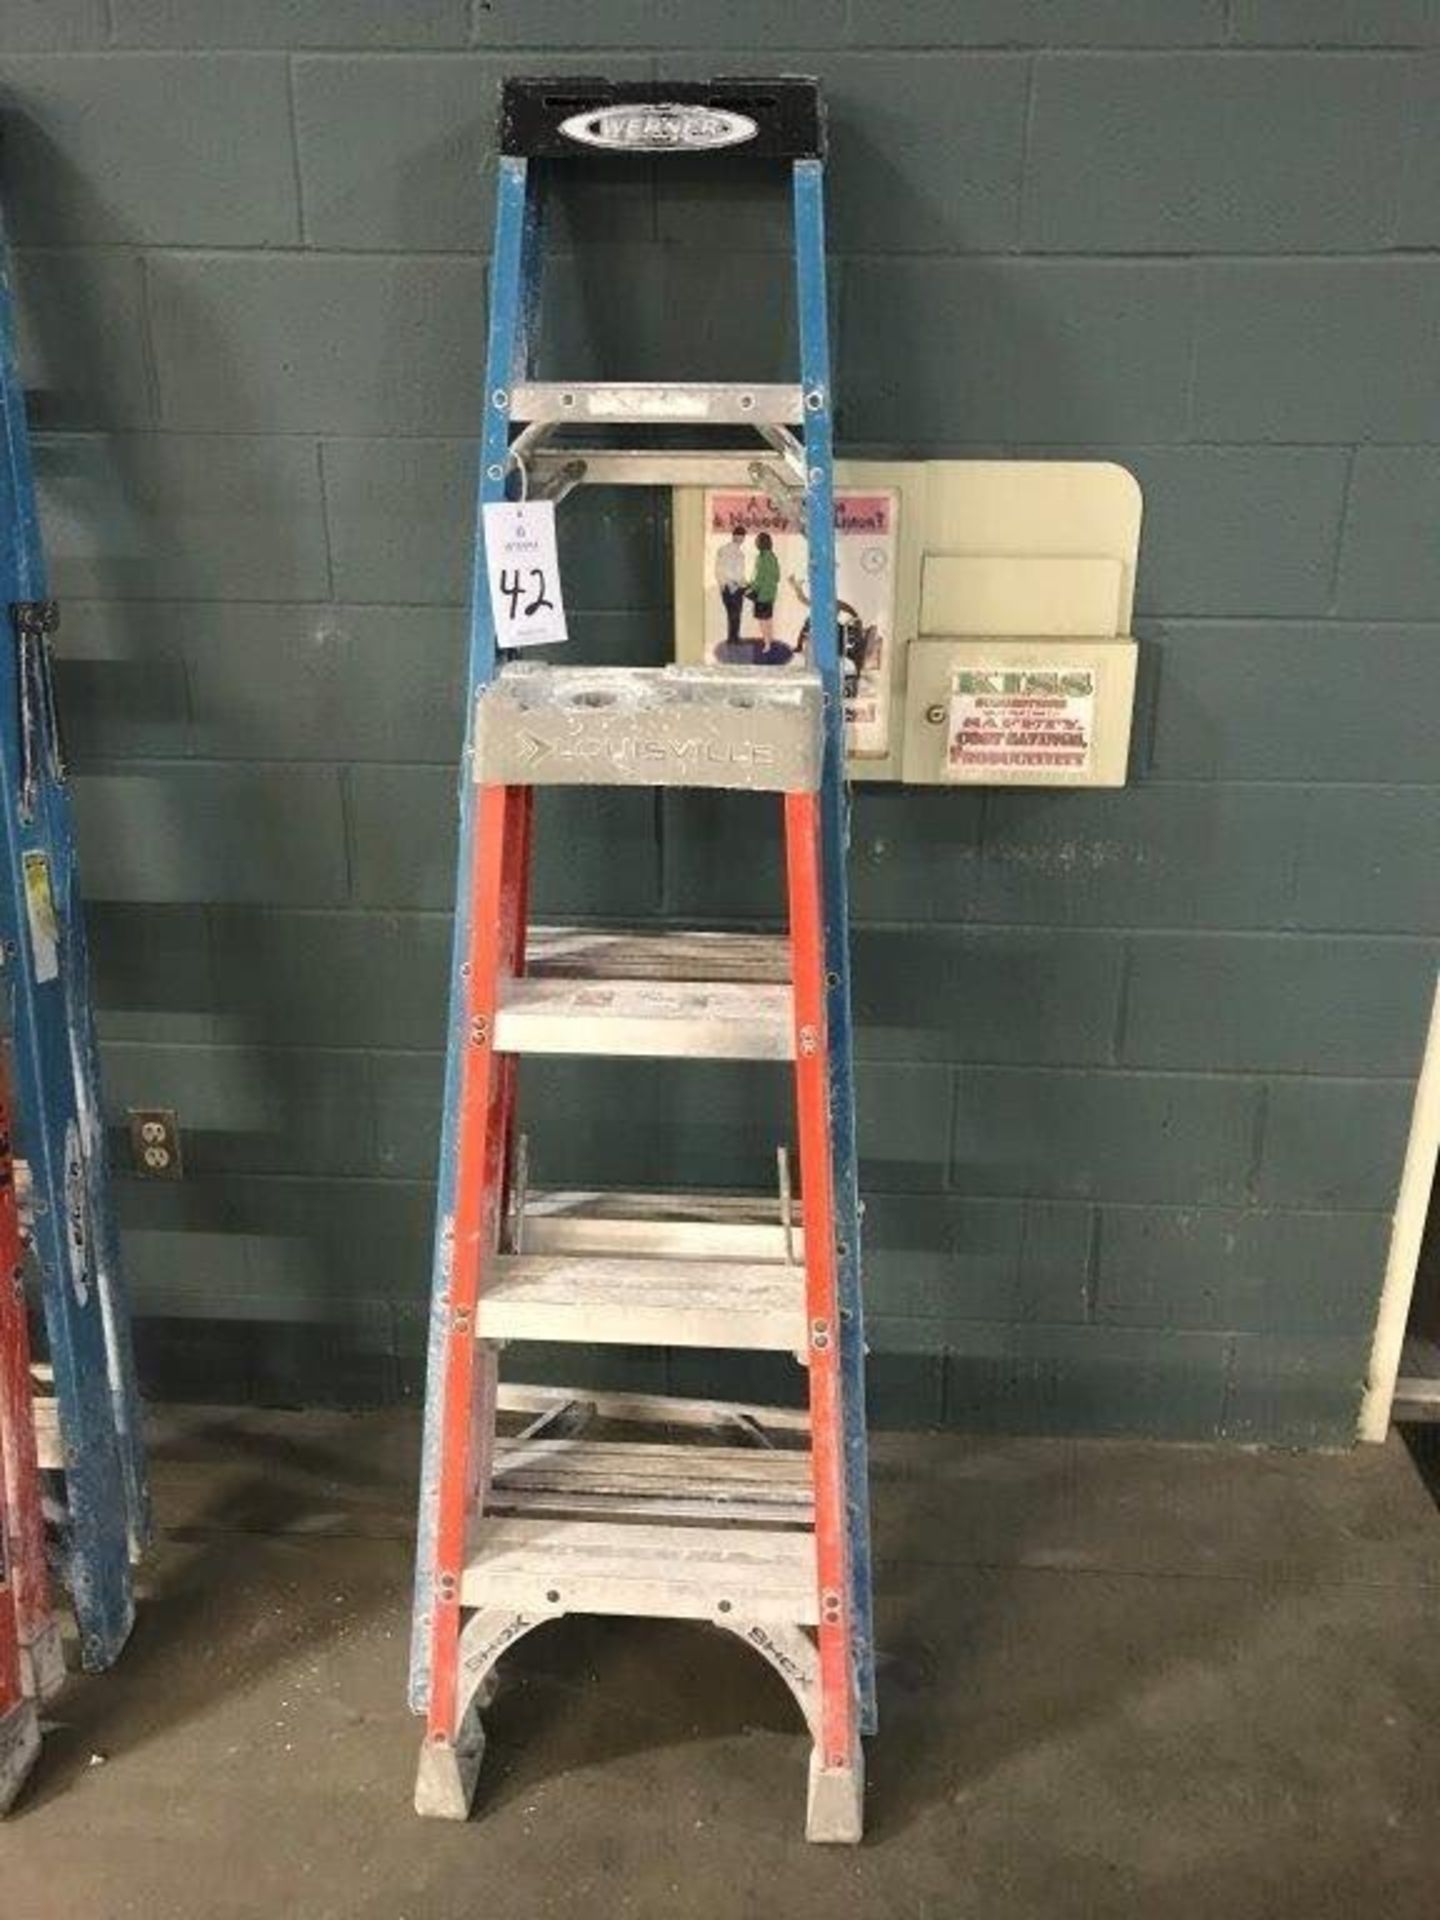 (2) Assorted Fiberglass Ladders